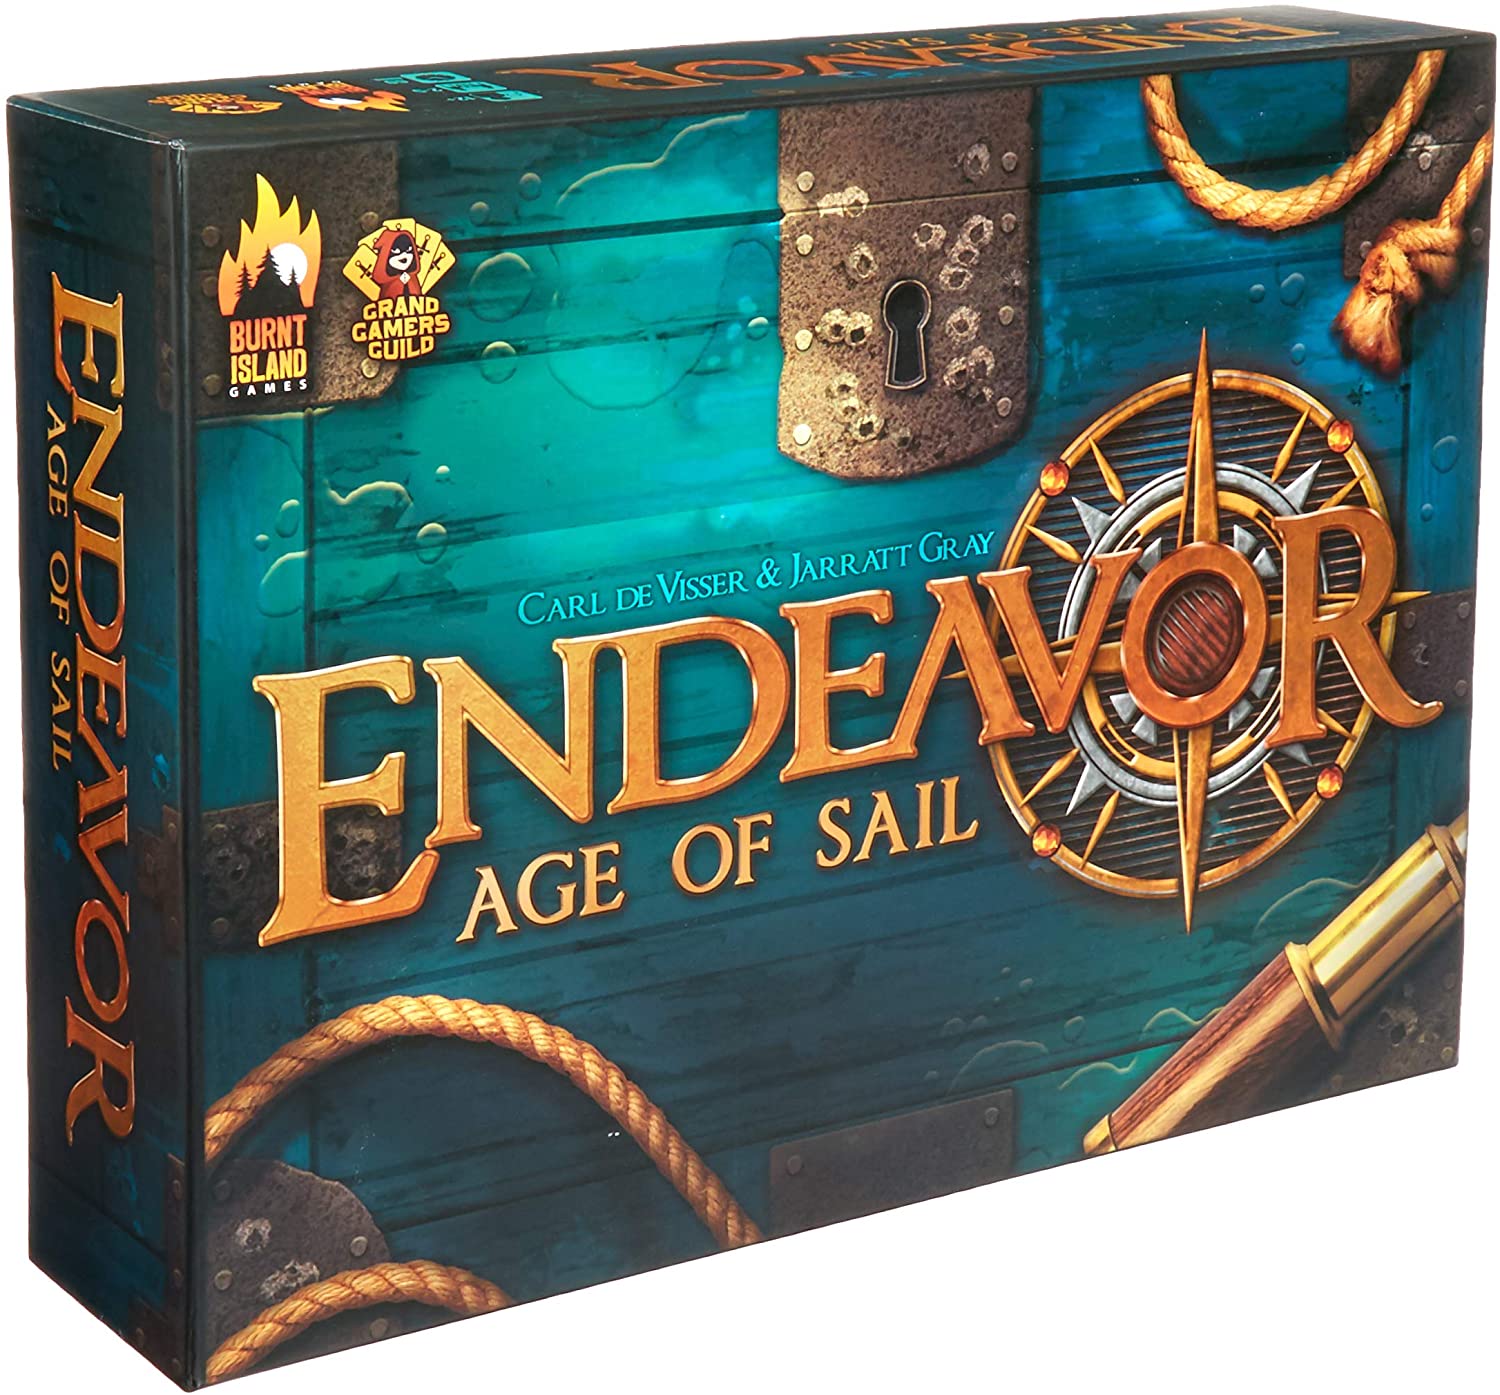 Endeavor - Age of Sail - Third Eye